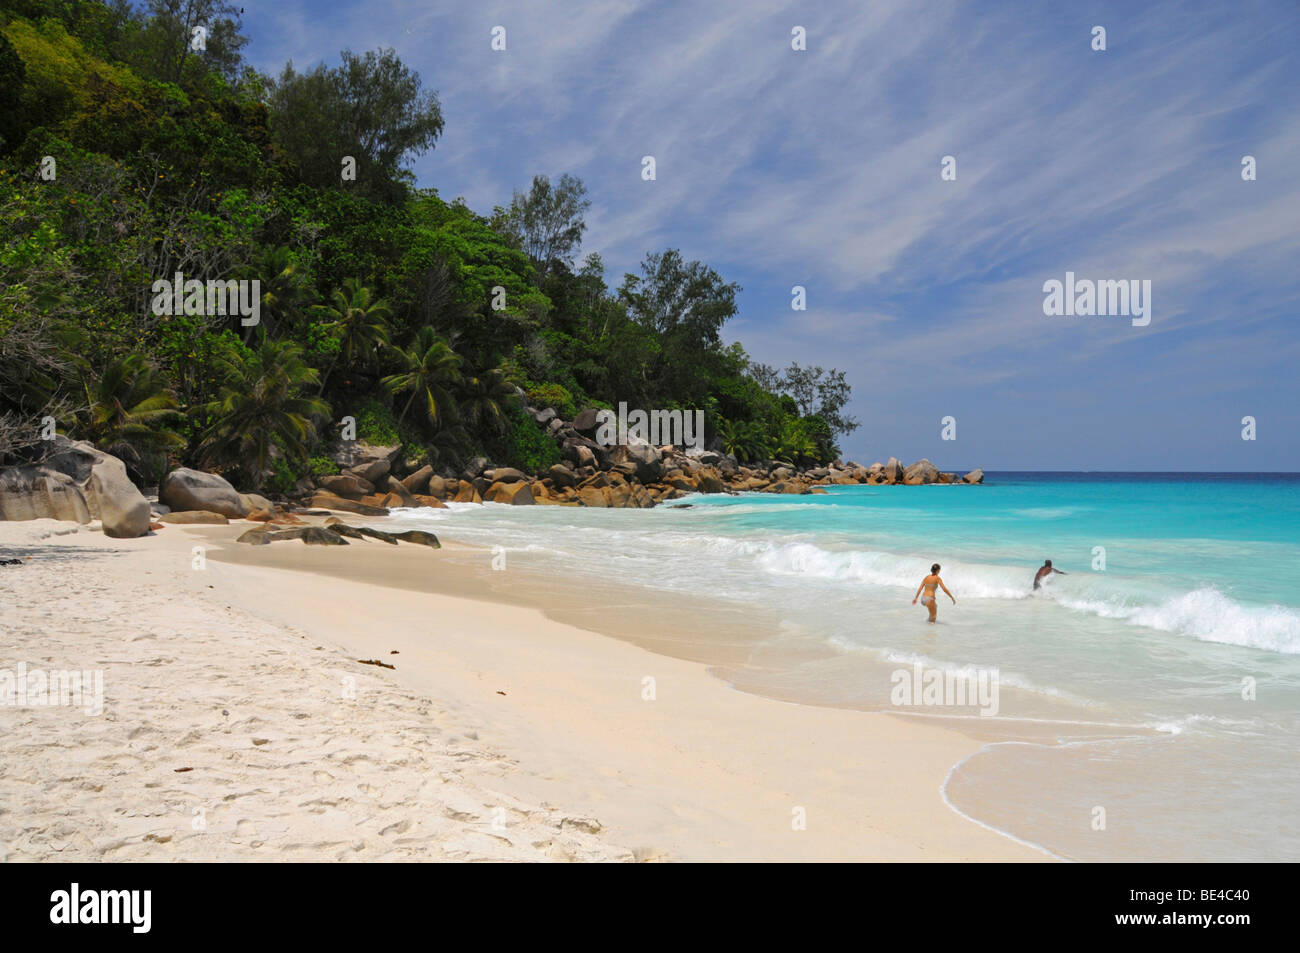 Beach with granite rocks and tropical vegetation, Anse Georgette, Praslin Island, Seychelles, Africa, Indian Ocean Stock Photo